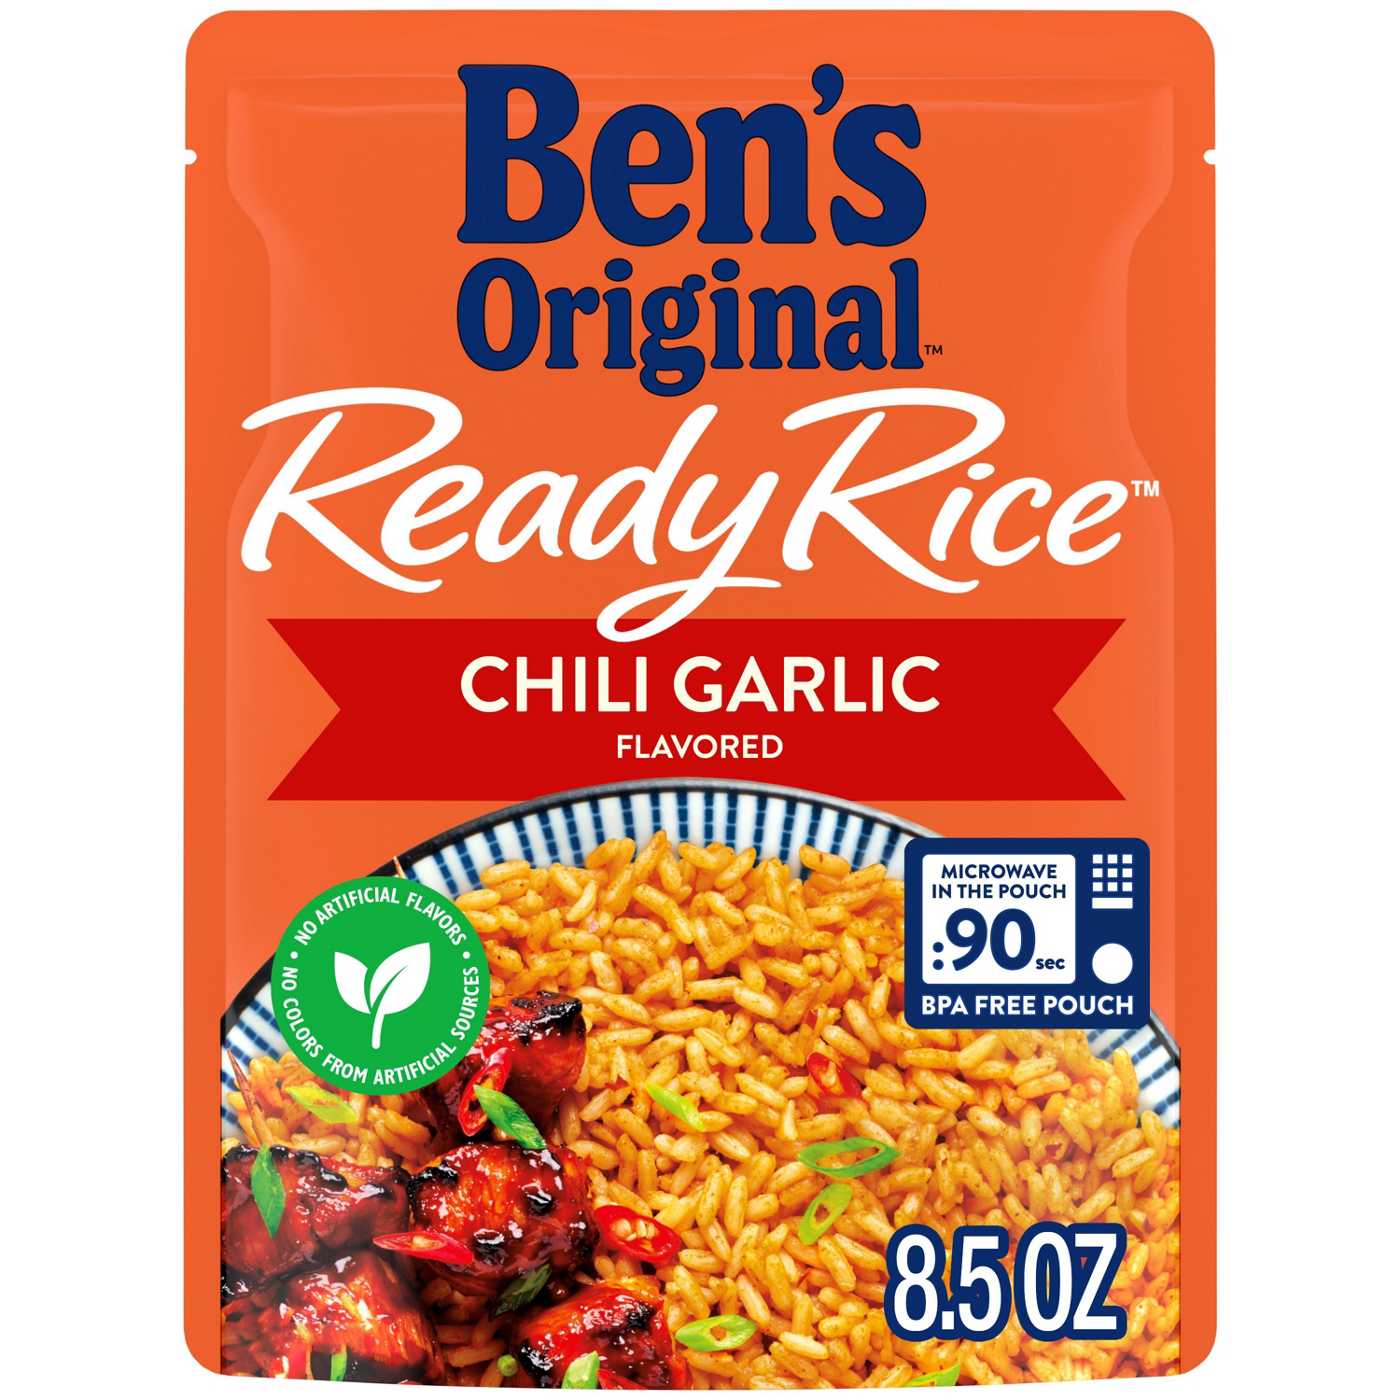 Ben's Original Ready Rice Chili Garlic Flavored Rice; image 1 of 2